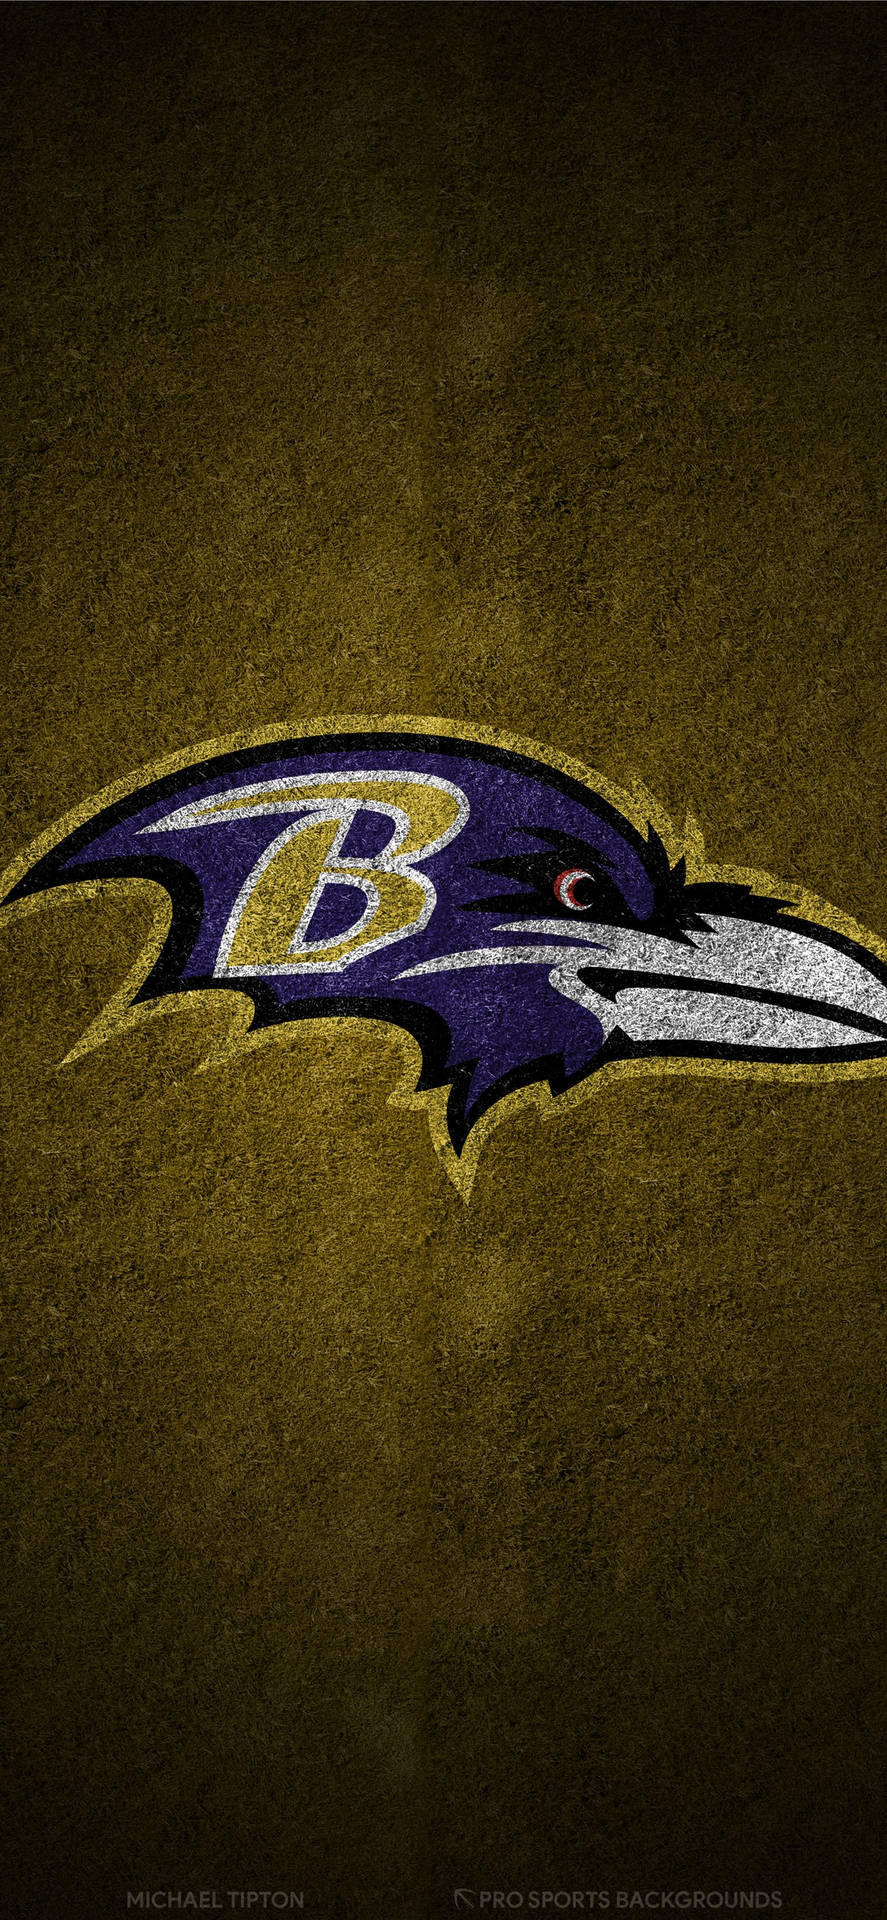 Vis din støtte til Baltimore Ravens med et iPhone tapet. Wallpaper